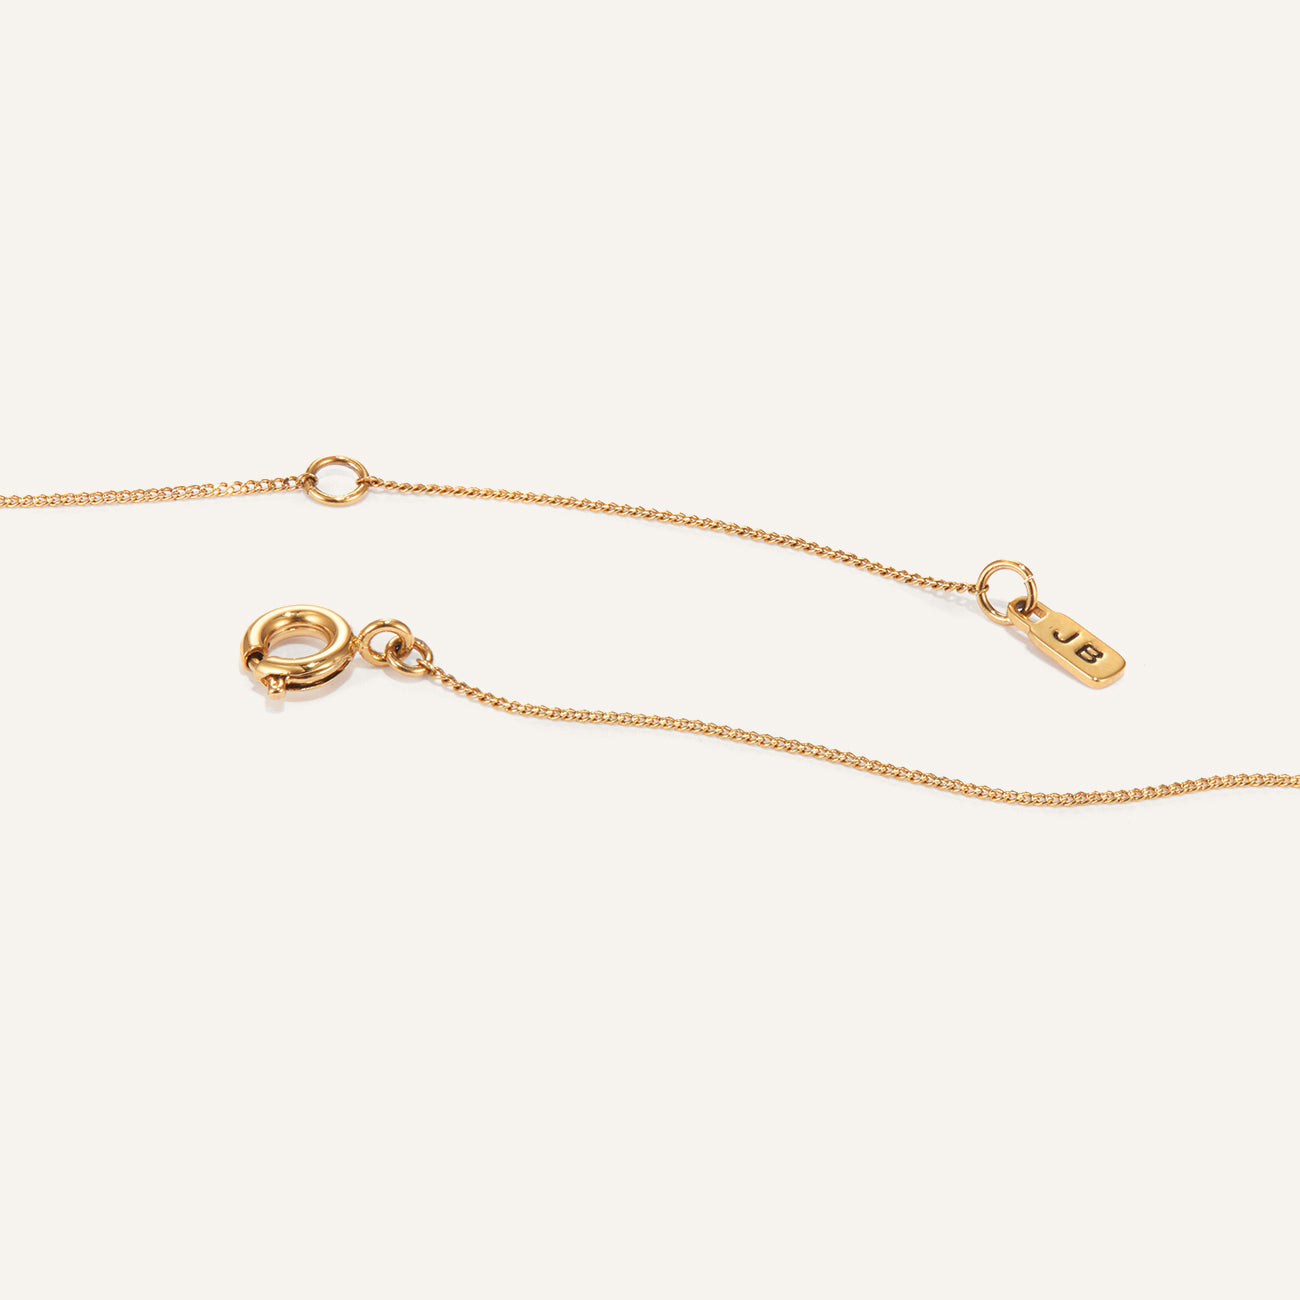 14k Gold Plated Monogram Necklace - J